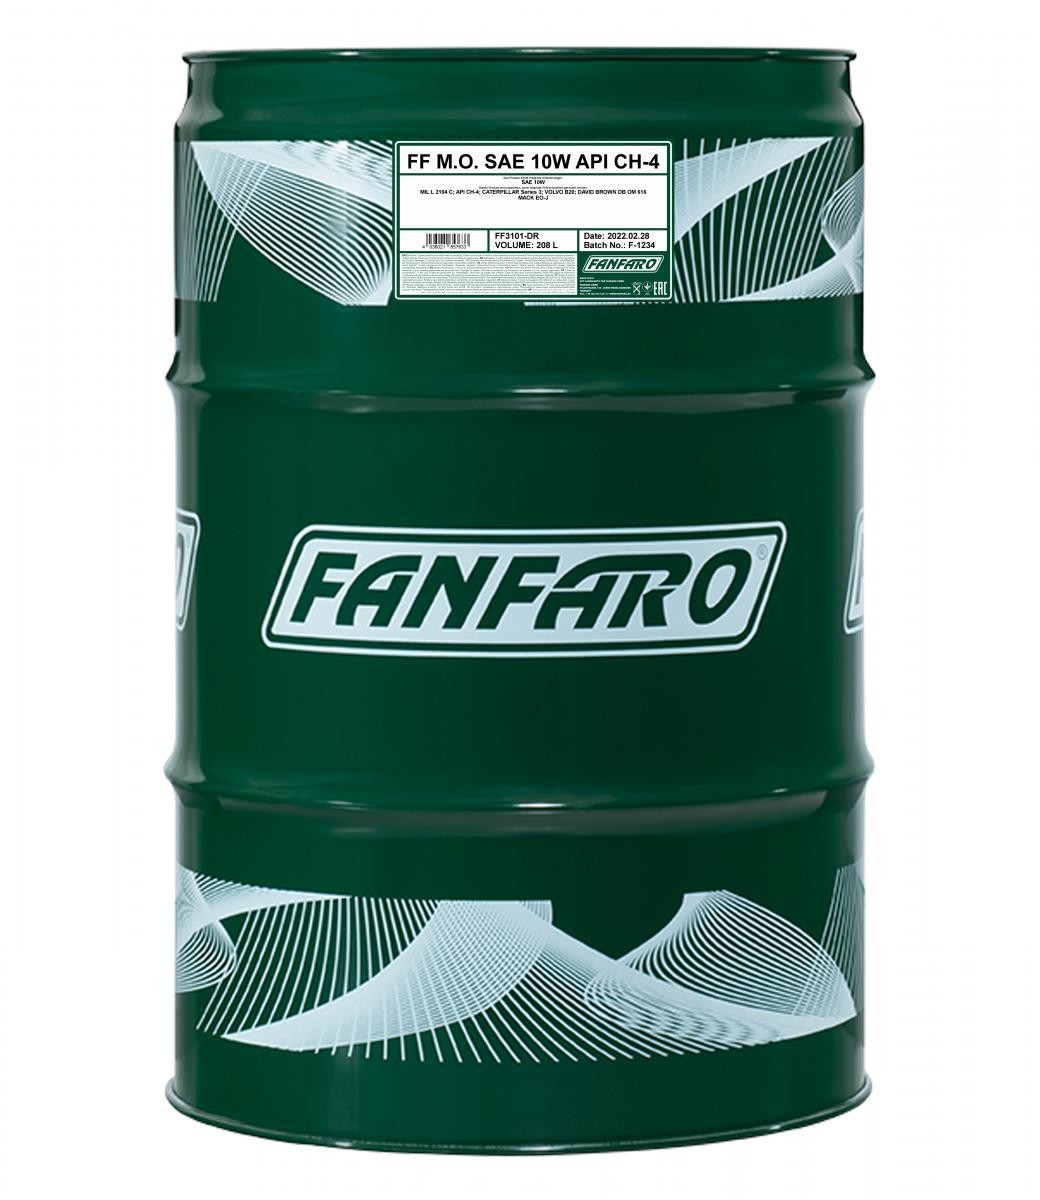 FANFARO M.O., SAE 10W 10W, 208l, Part Synthetic Oil Motor oil FF3101-DR buy